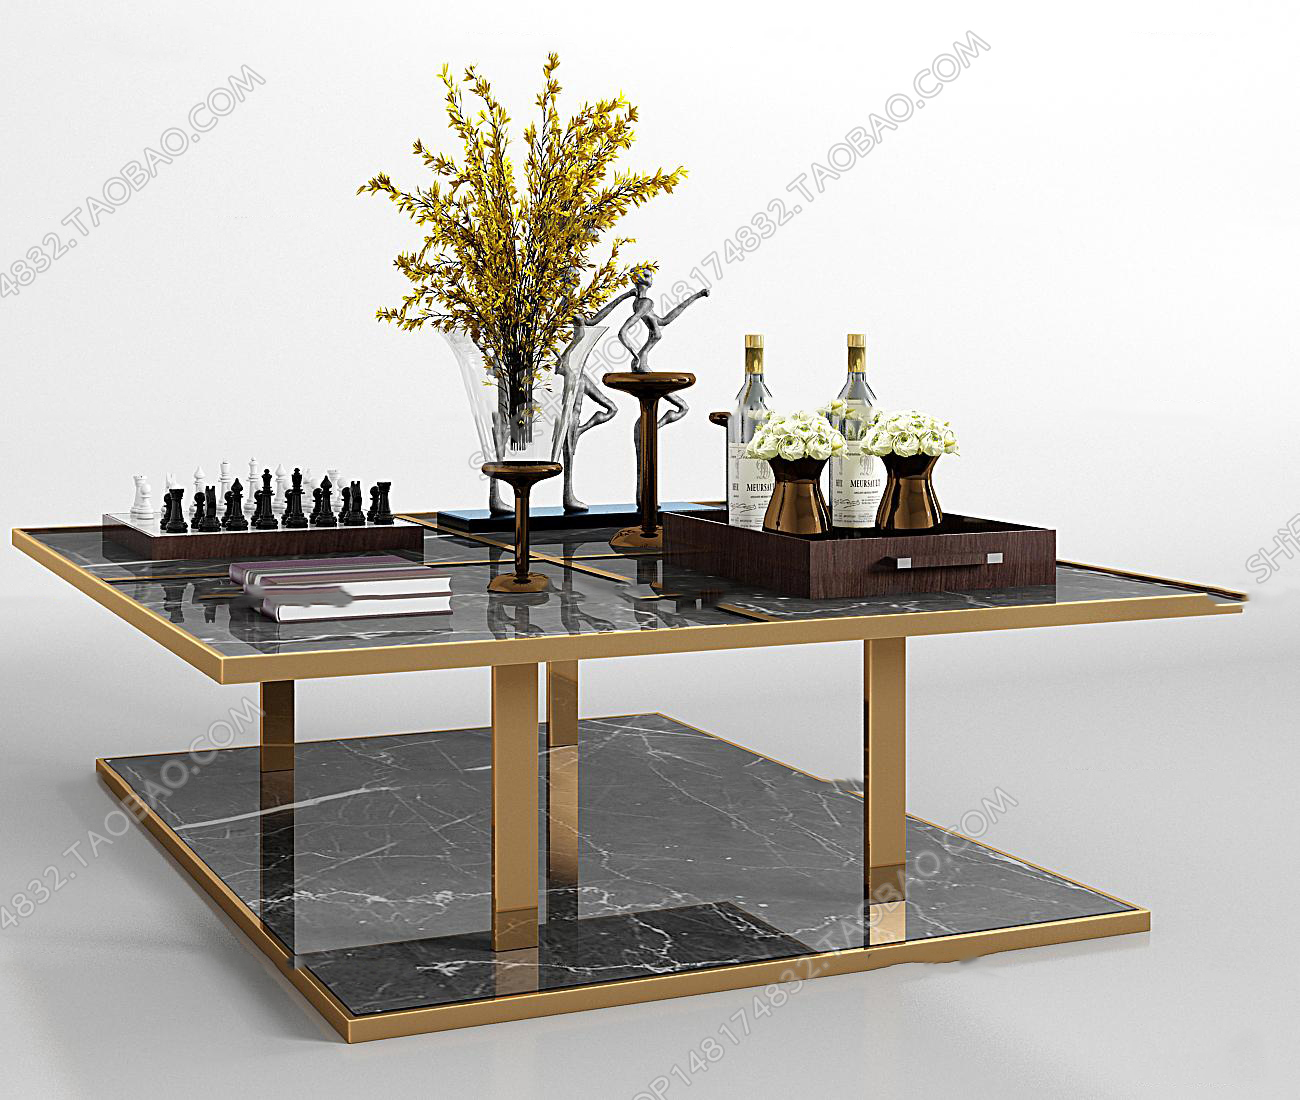 3DSKY MODELS – COFFEE TABLE 3D MODELS – 033 - thumbnail 1